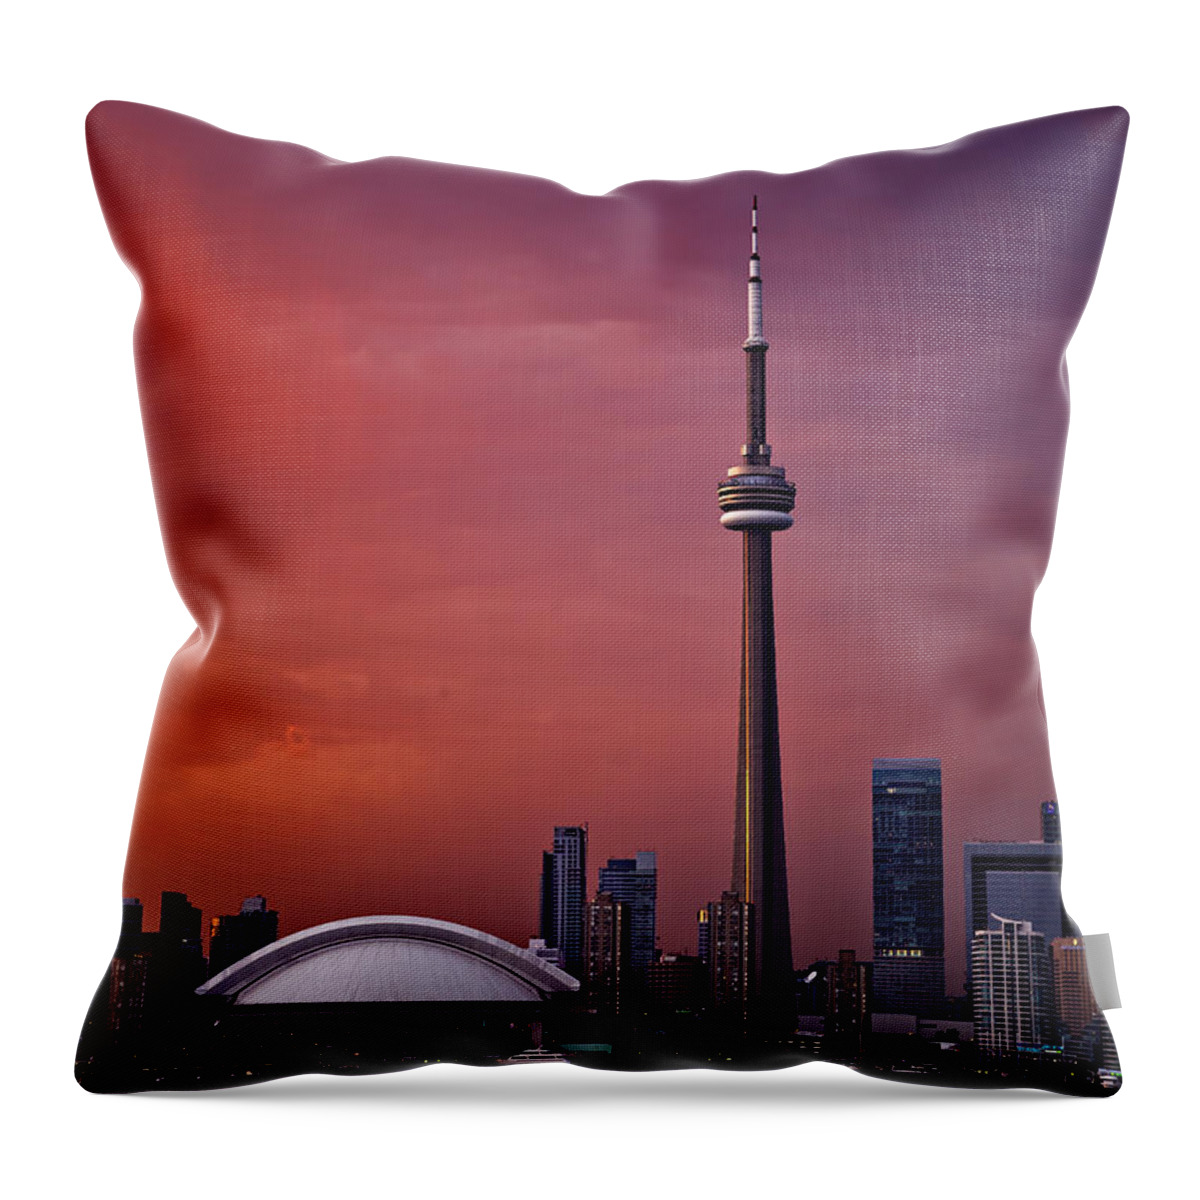 Toronto Sunset Throw Pillow featuring the photograph Toronto Sunset by Ian Good